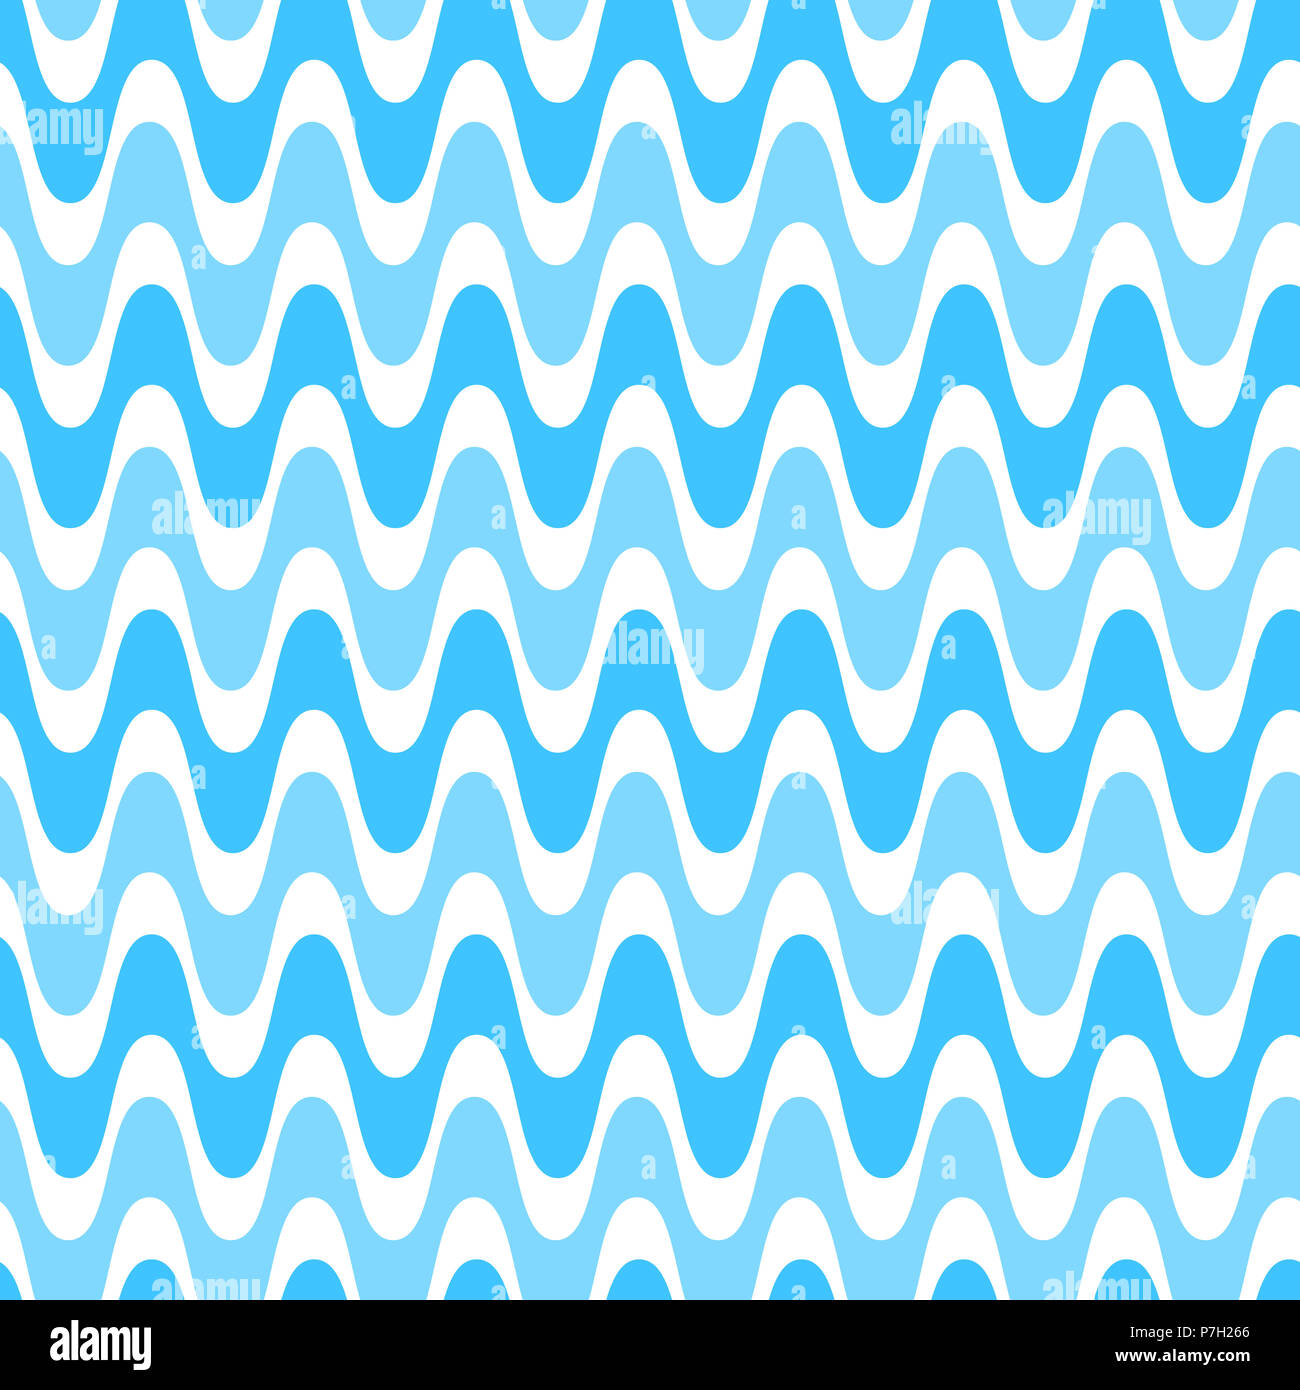 Waves geometric seamless pattern. Simple wavy zigzag stripes background. Colorful modern decoration design Stock Photo